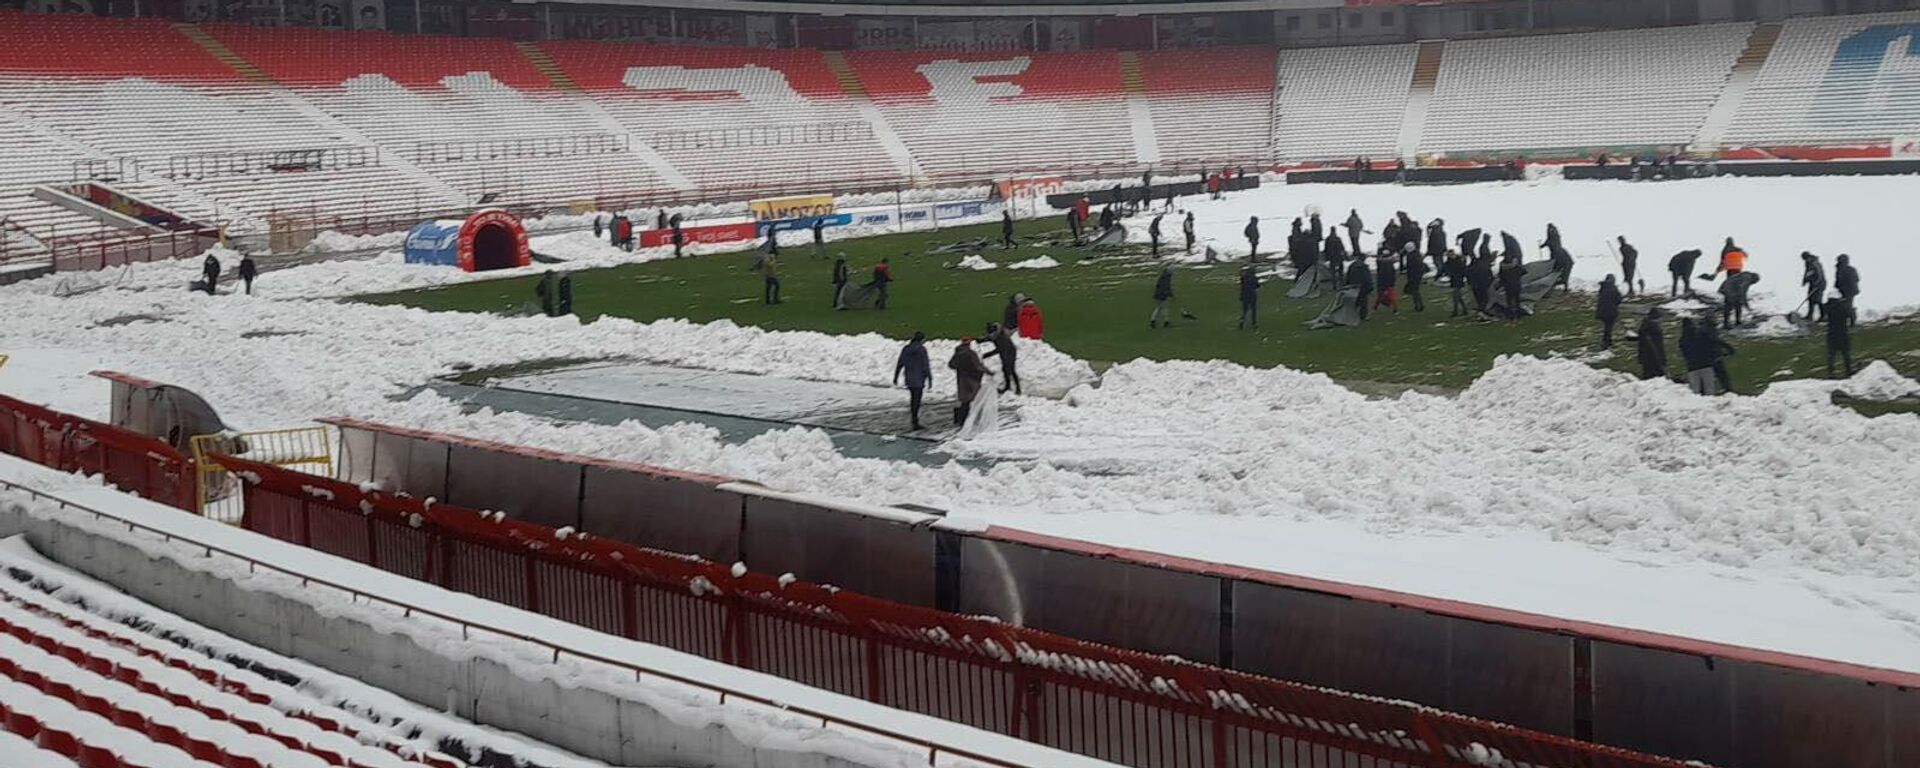 Radna akcija na stadionu Rajko Mitić – uklanjanje snega pred utakmicu FK Crvena zvezda - Radnik - Sputnik Srbija, 1920, 13.12.2021